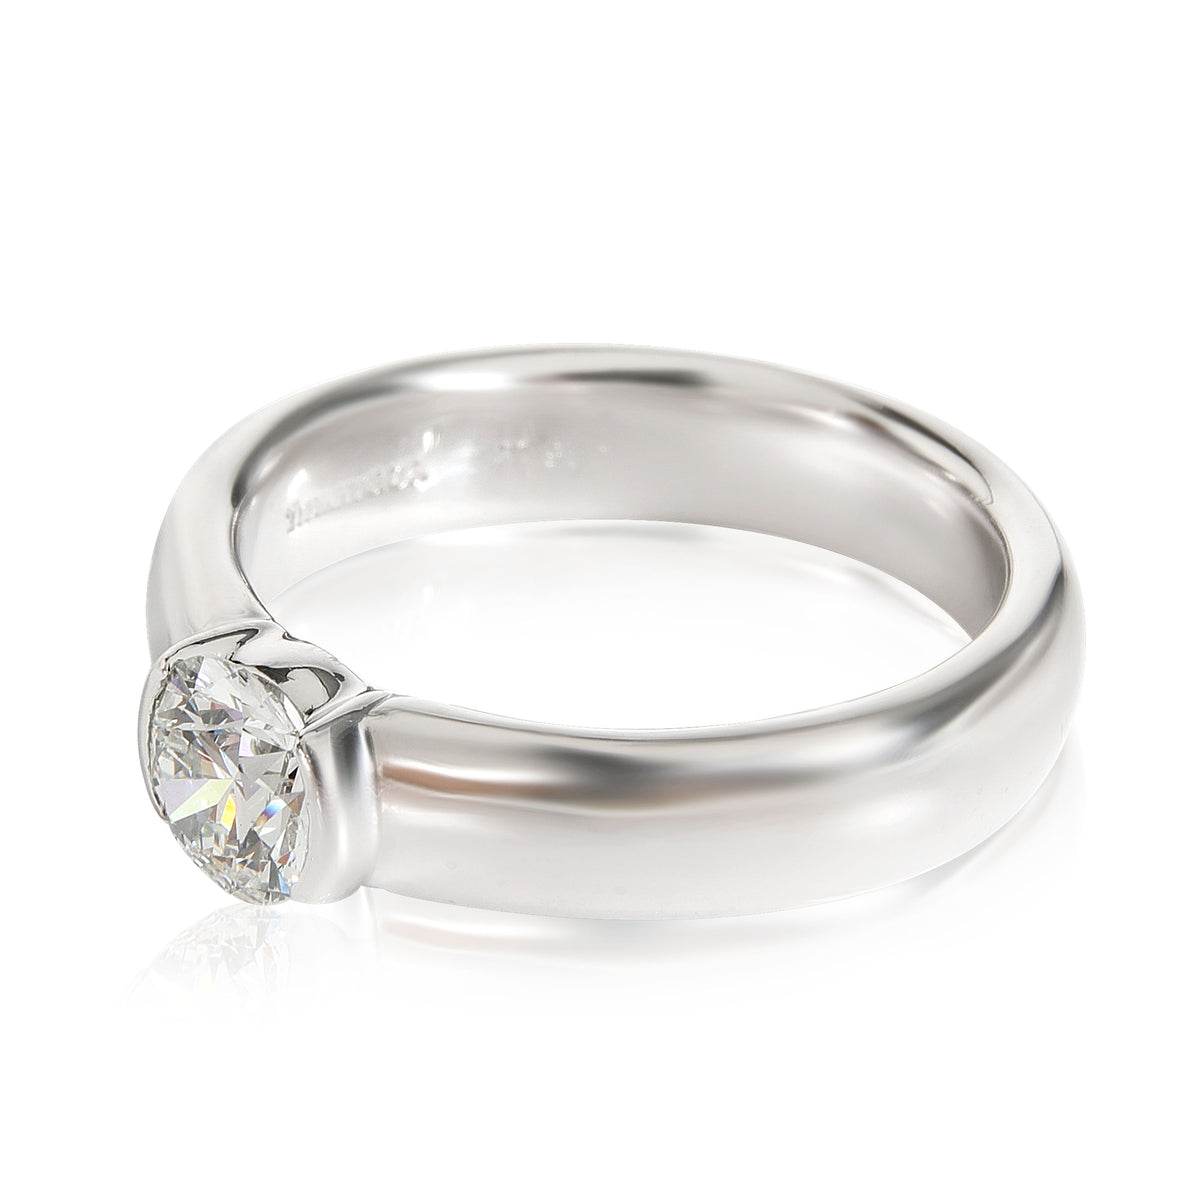 Tiffany & Co. Etoile Diamond Engagement Ring in Platinum G VS1 0.58 Ct